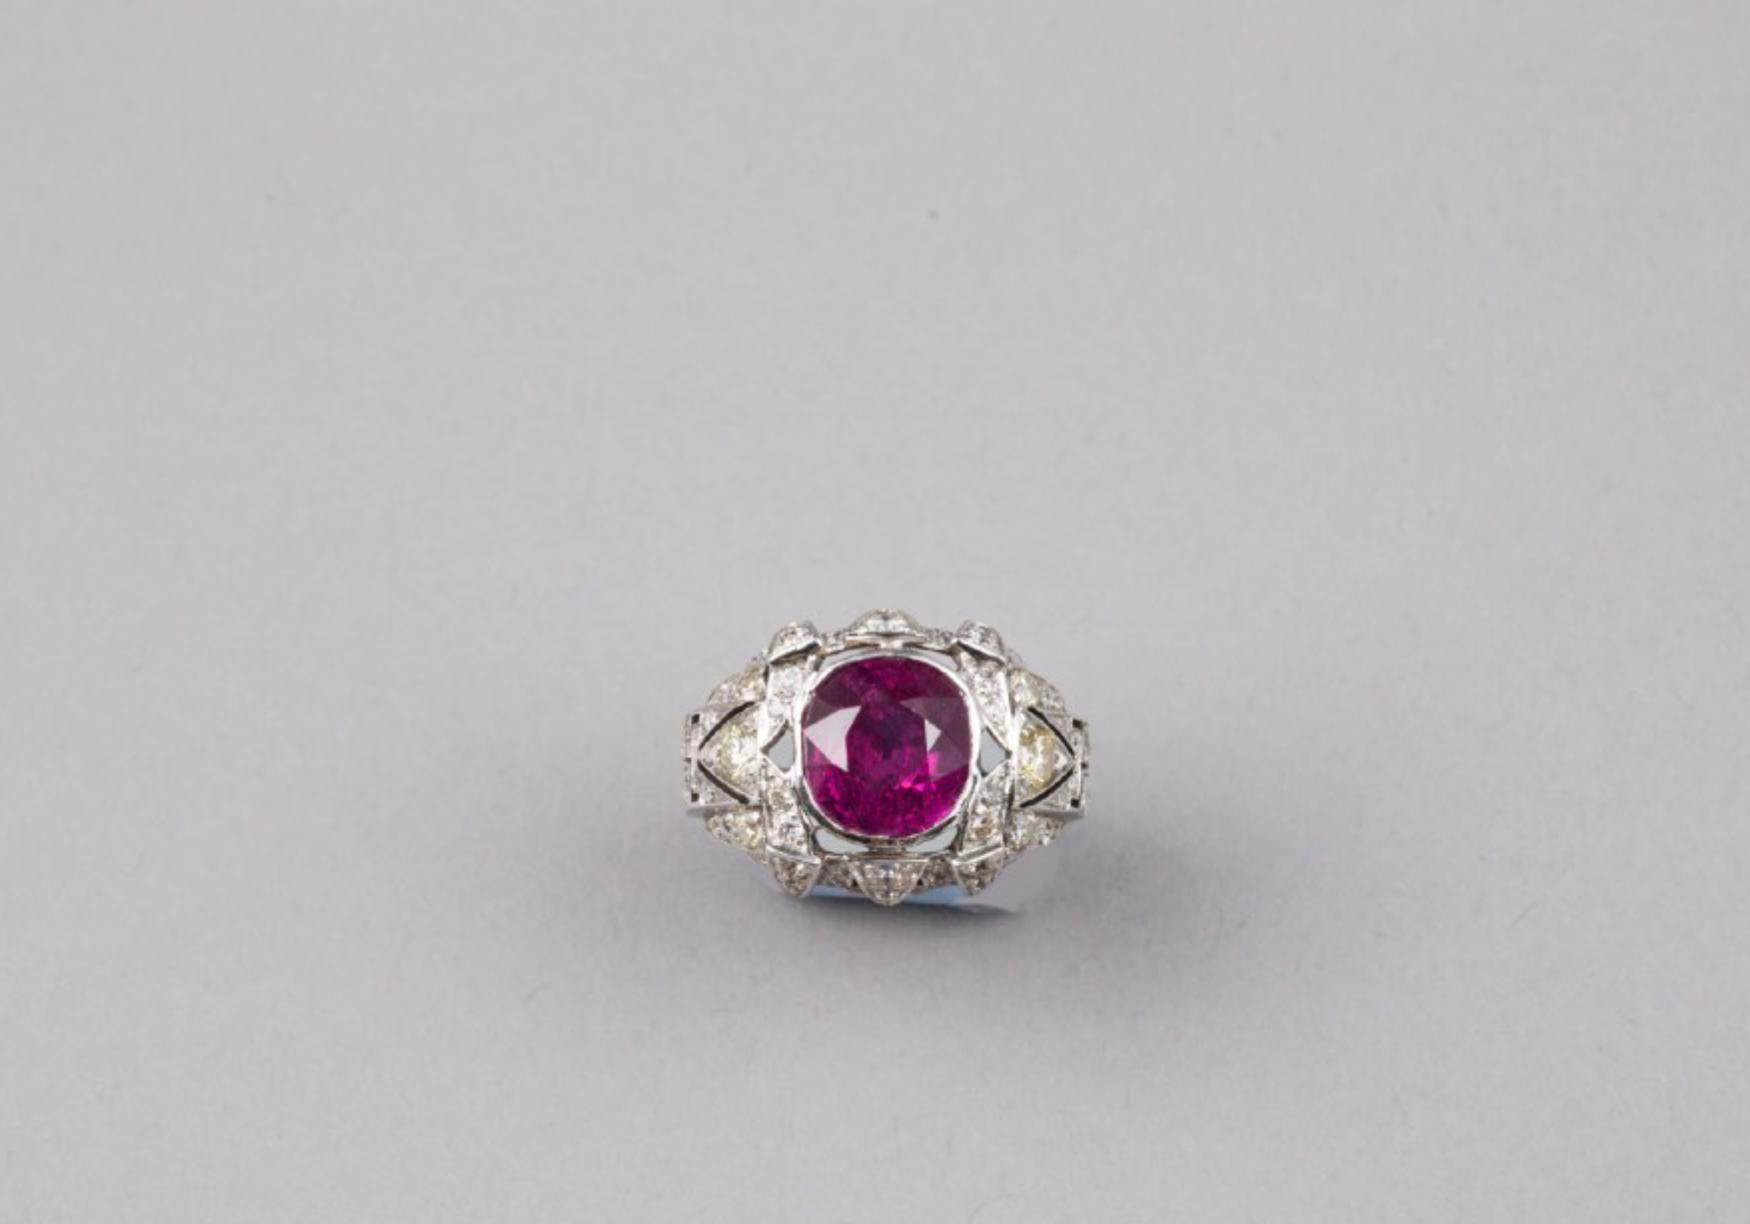 A 18K White Gold Diamond Natural Ruby Ring